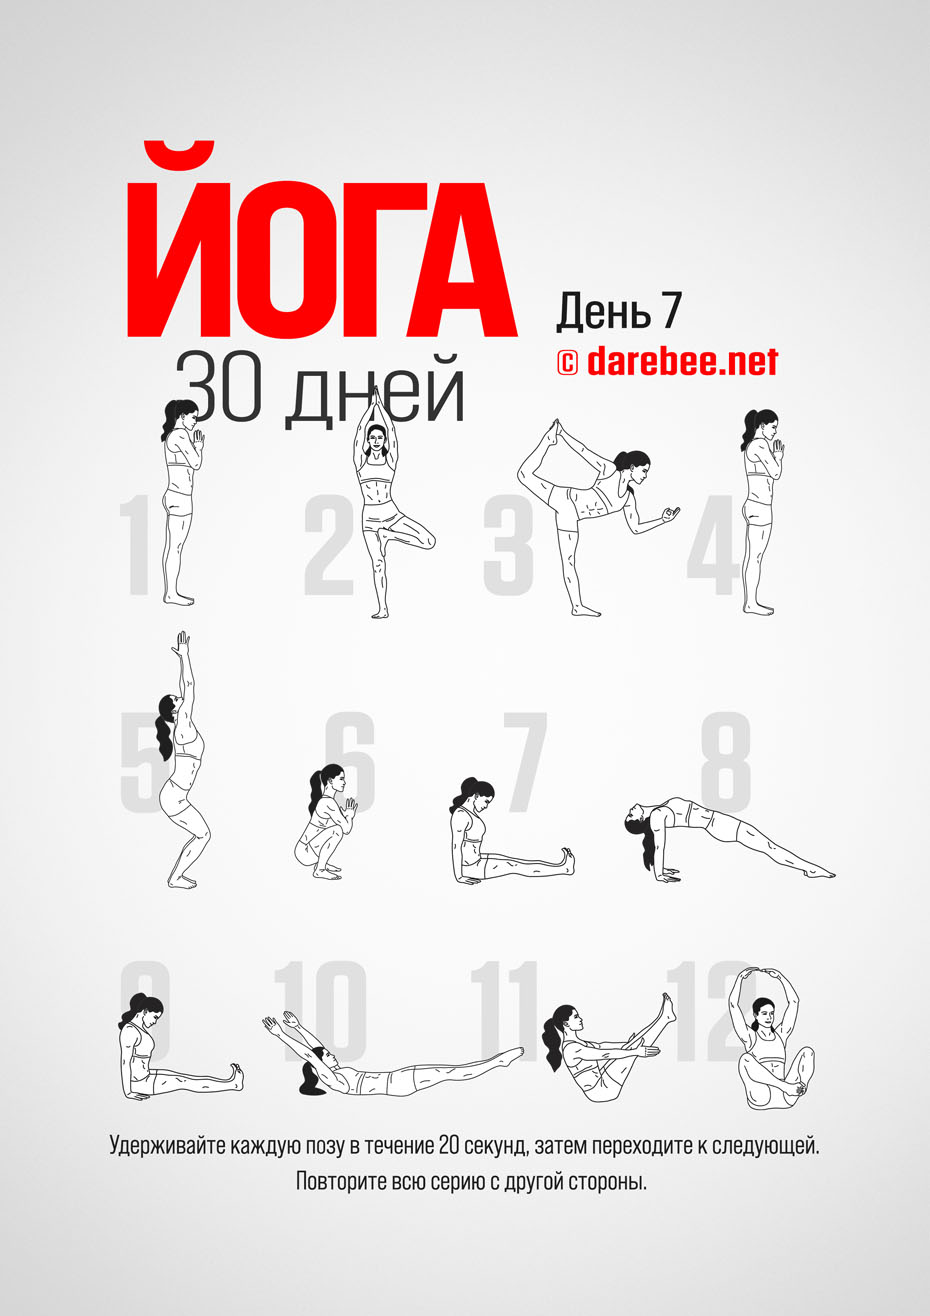 30 Days of Yoga - 30 Day Tendon Strength Program